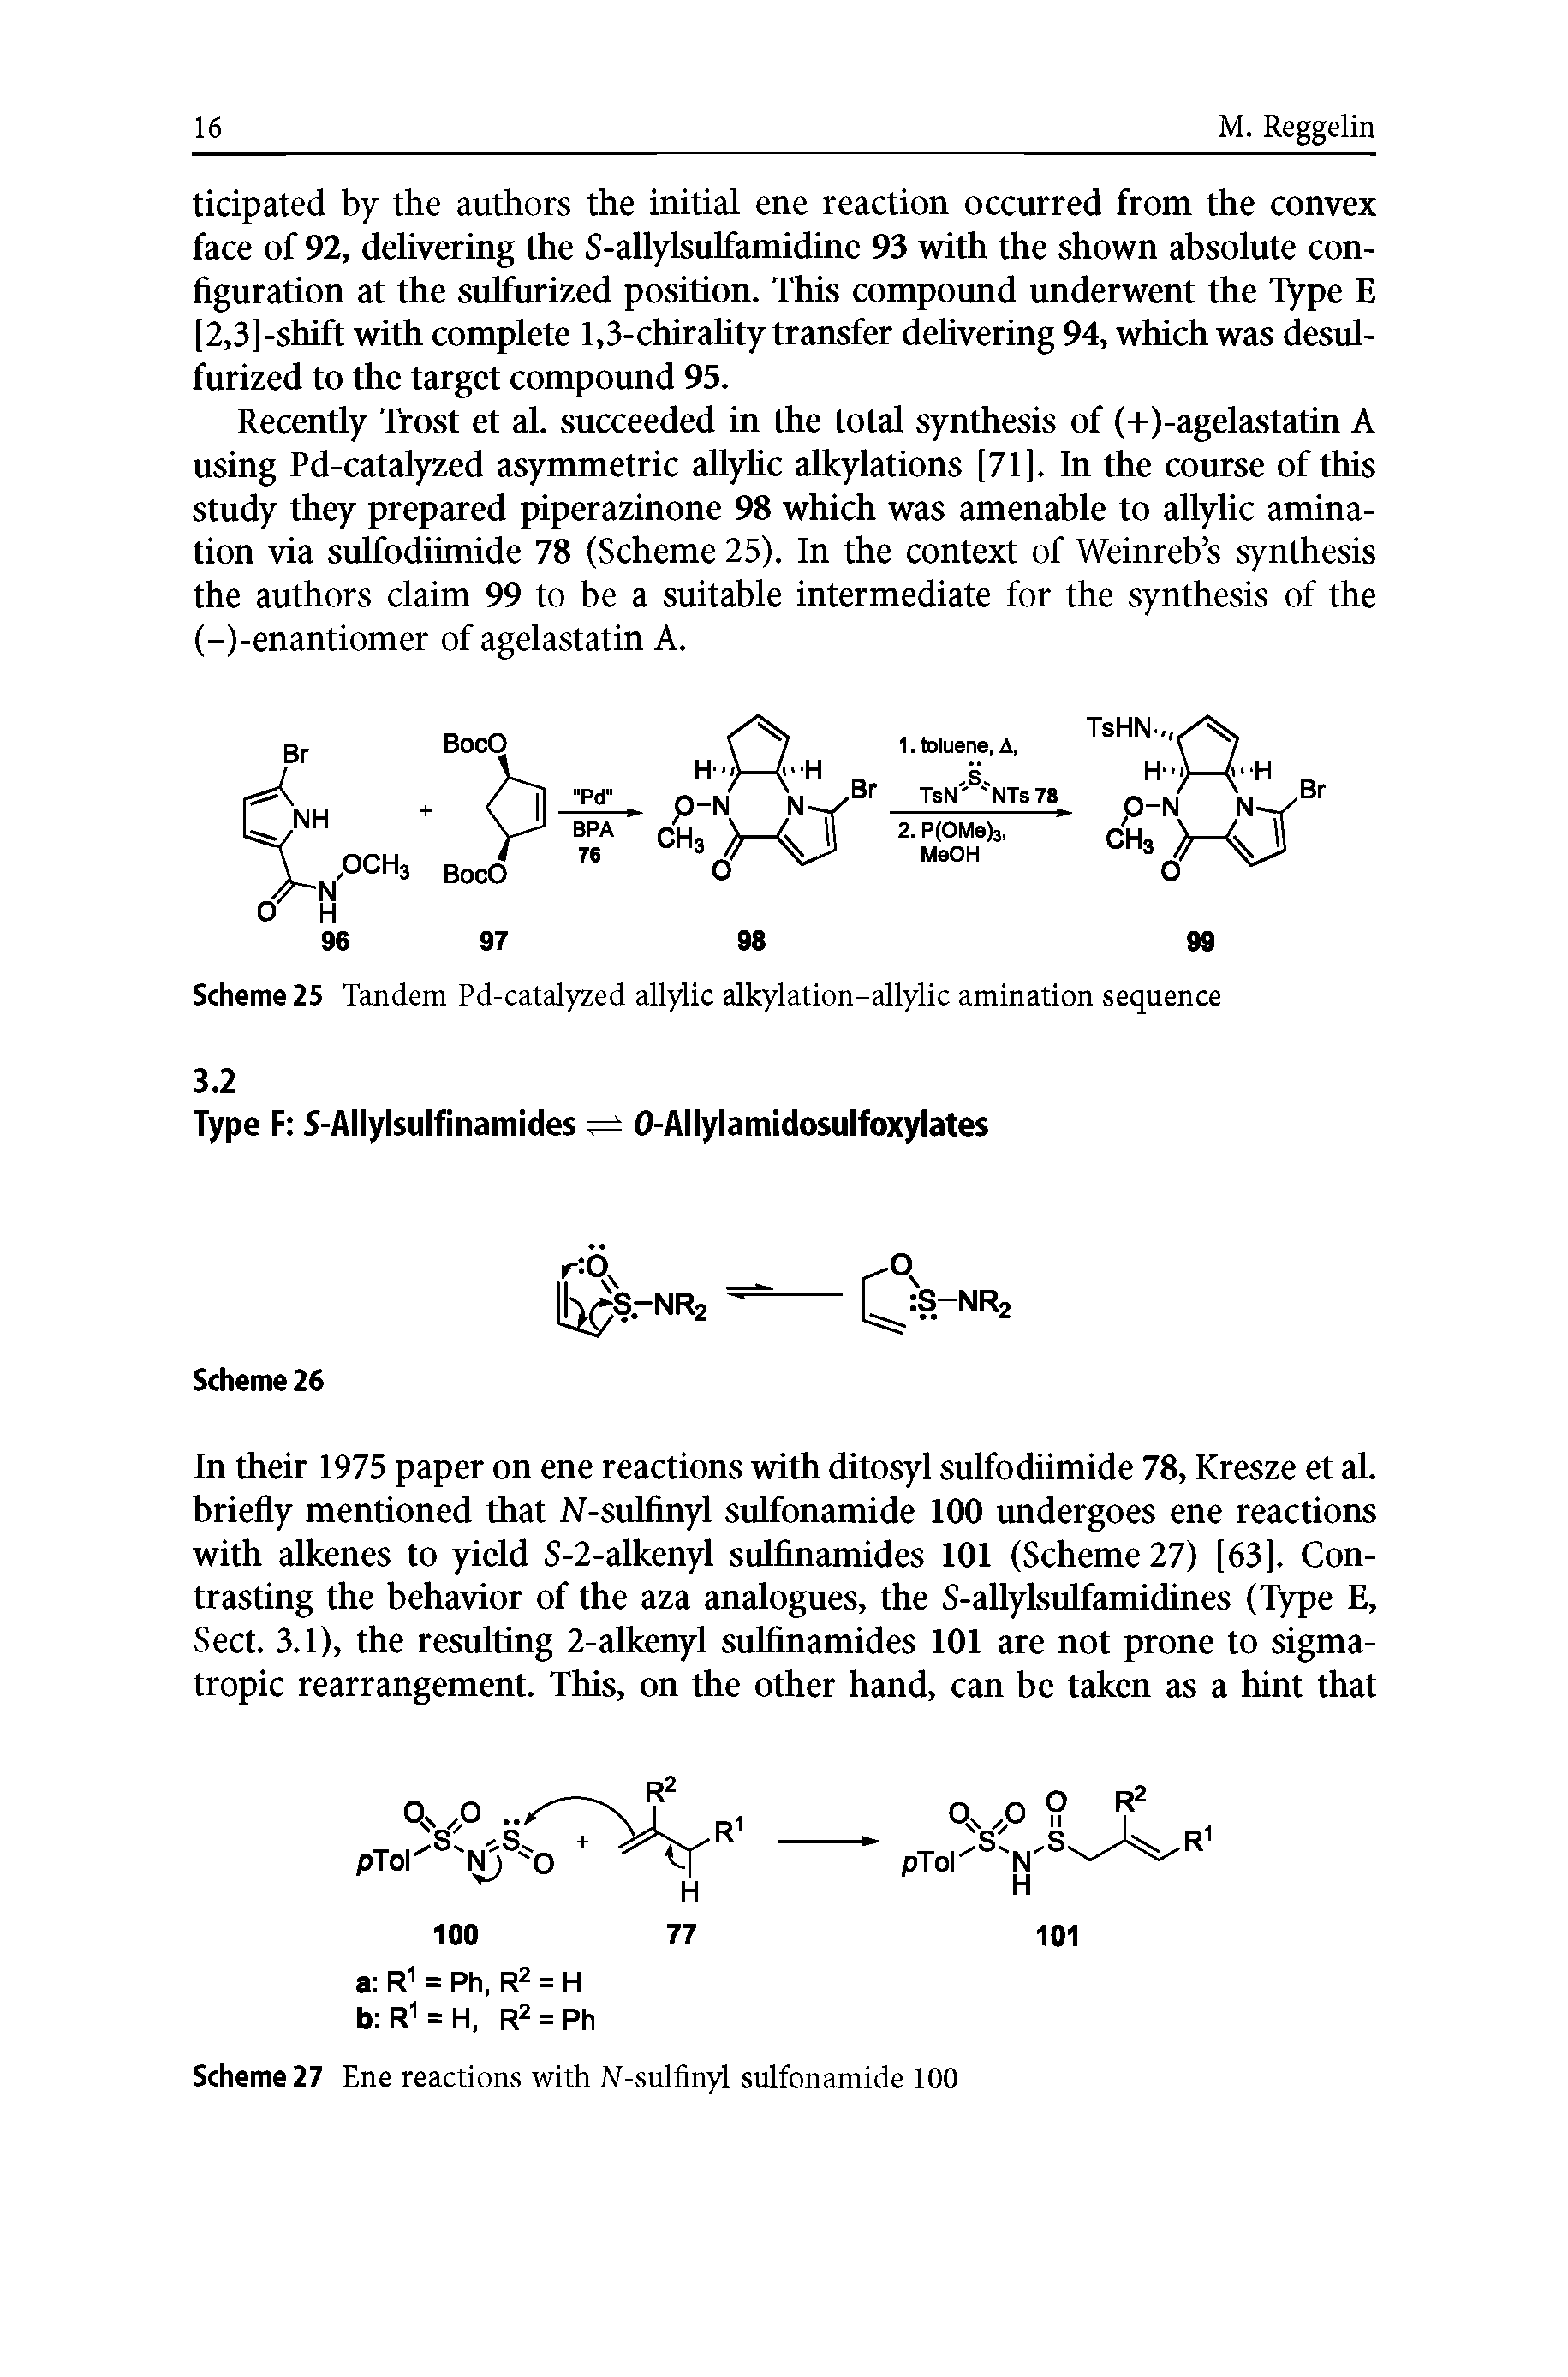 Scheme 25 Tandem Pd-catalyzed allylic alkylation-allylic amination sequence...